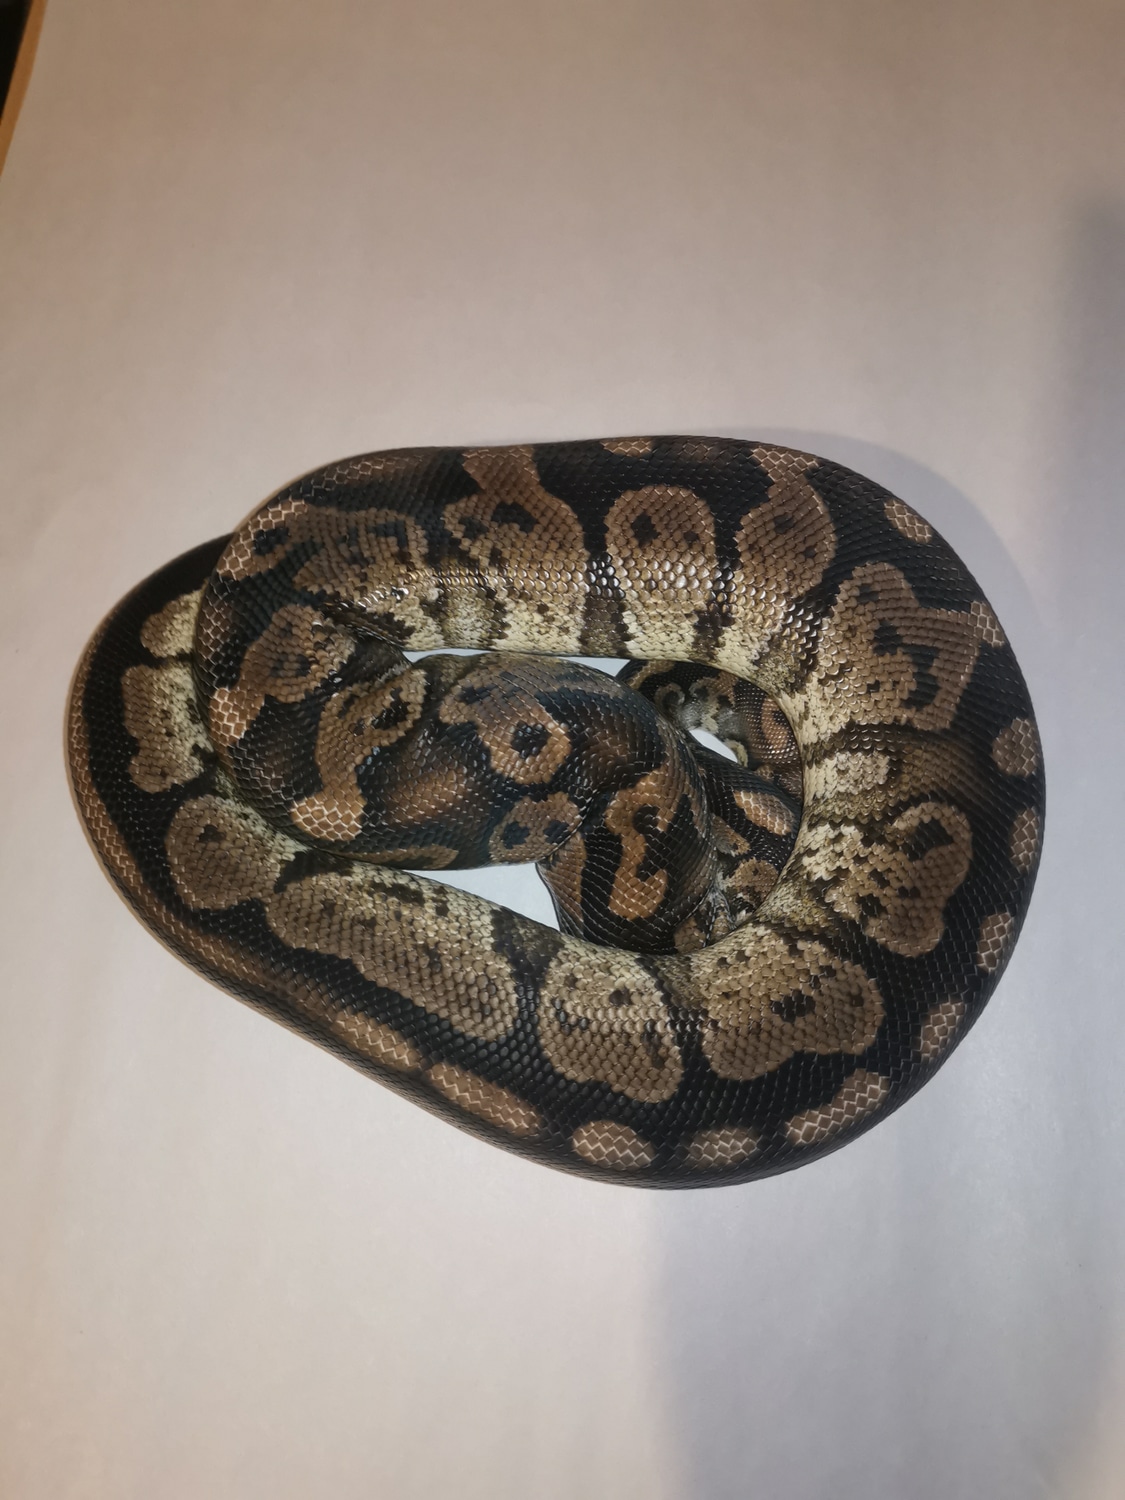 Twister Ball Python by Ridiculous Royal Pythons